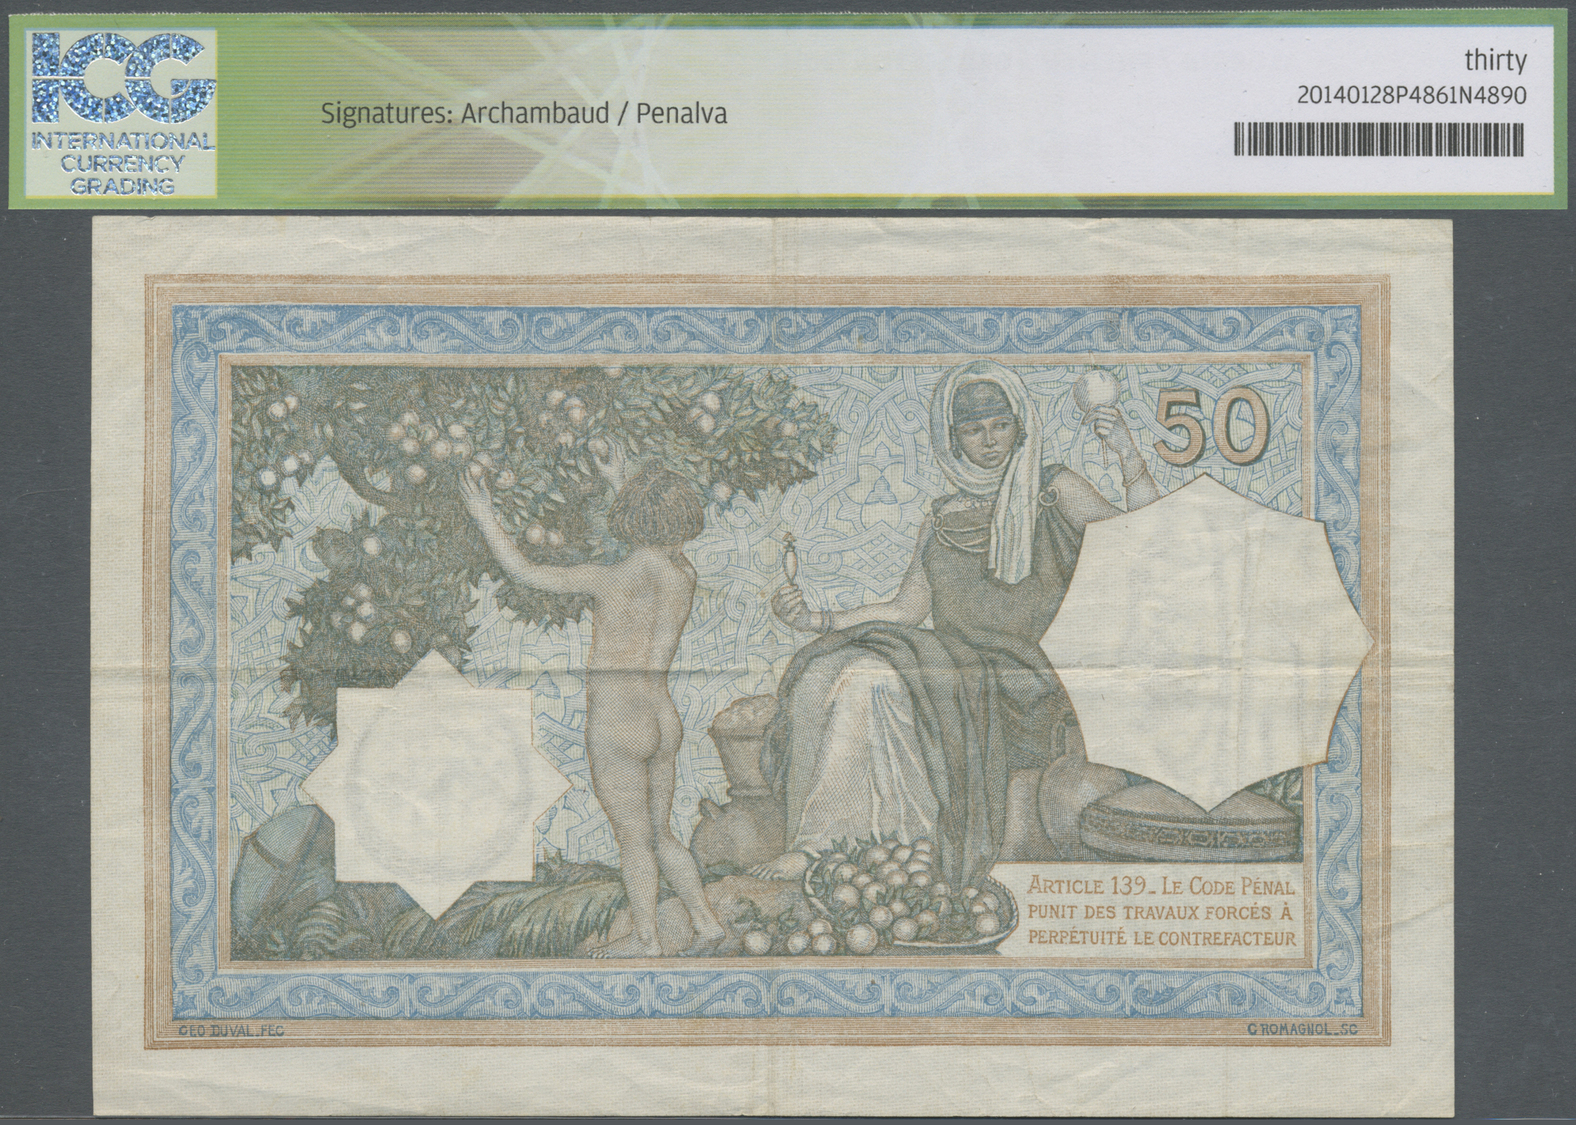 00011 Algeria / Algerien: 50 Francs 1936 P. 80a, Condition: ICG Graded 30 Very Fine. - Algeria